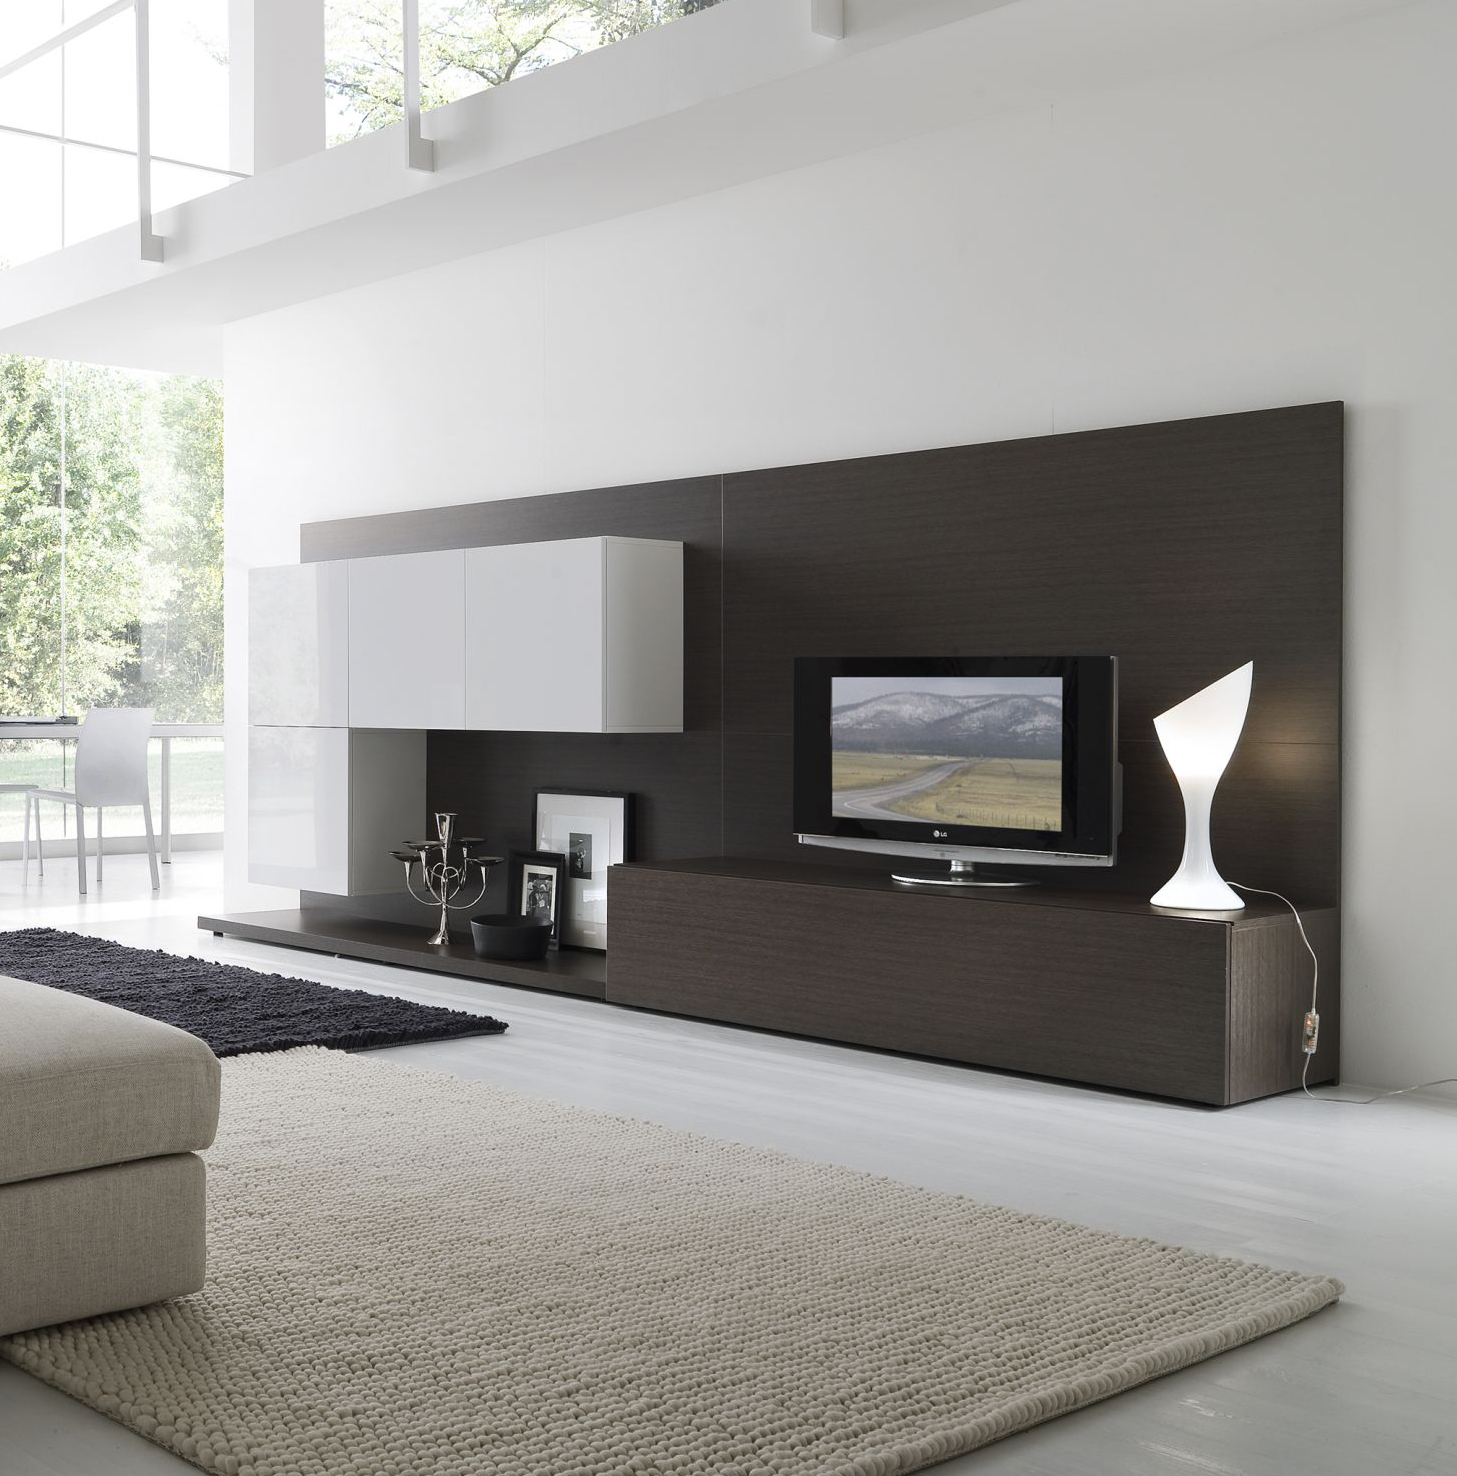 design of interior living room Interior design for living rooms sitting